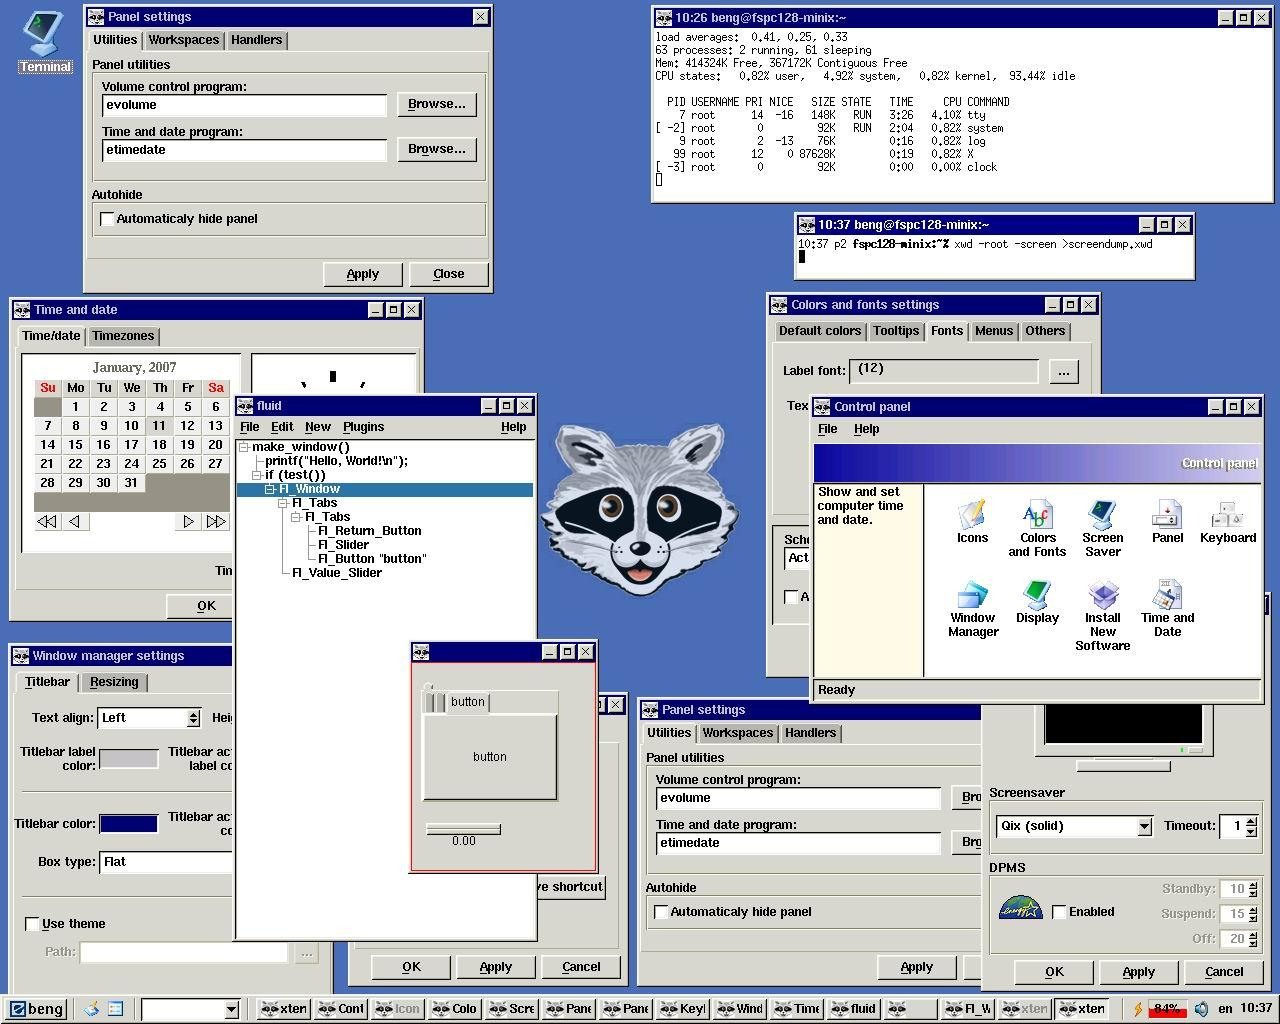 MINIX (Linux) Download: A free UNIX-like operating system designed